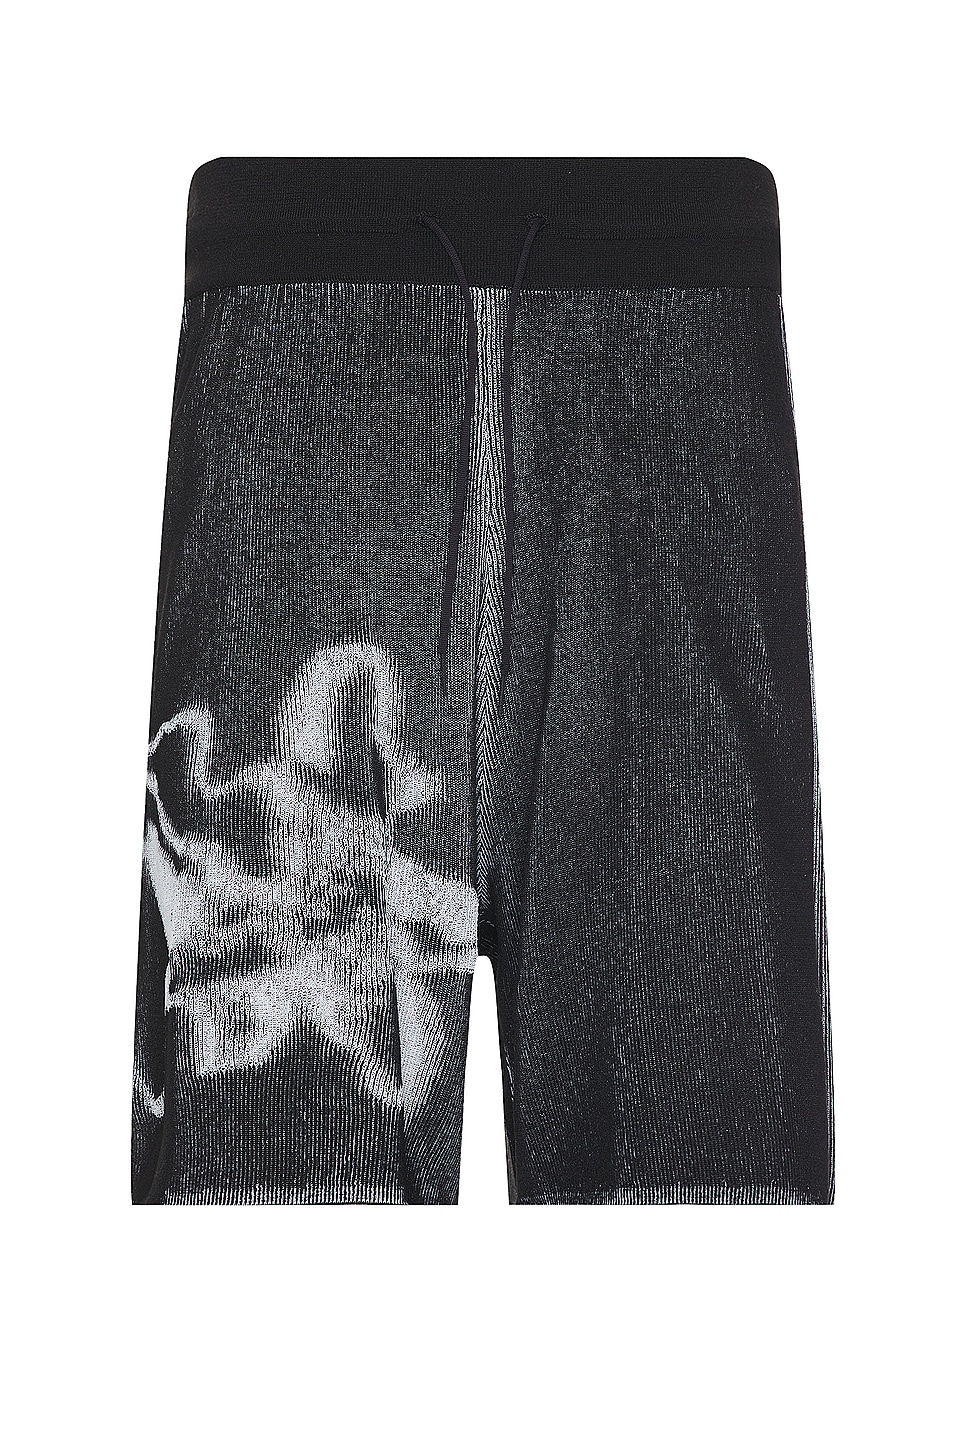 Image 1 of Y-3 Yohji Yamamoto Gfx Knit Shorts in Black & White